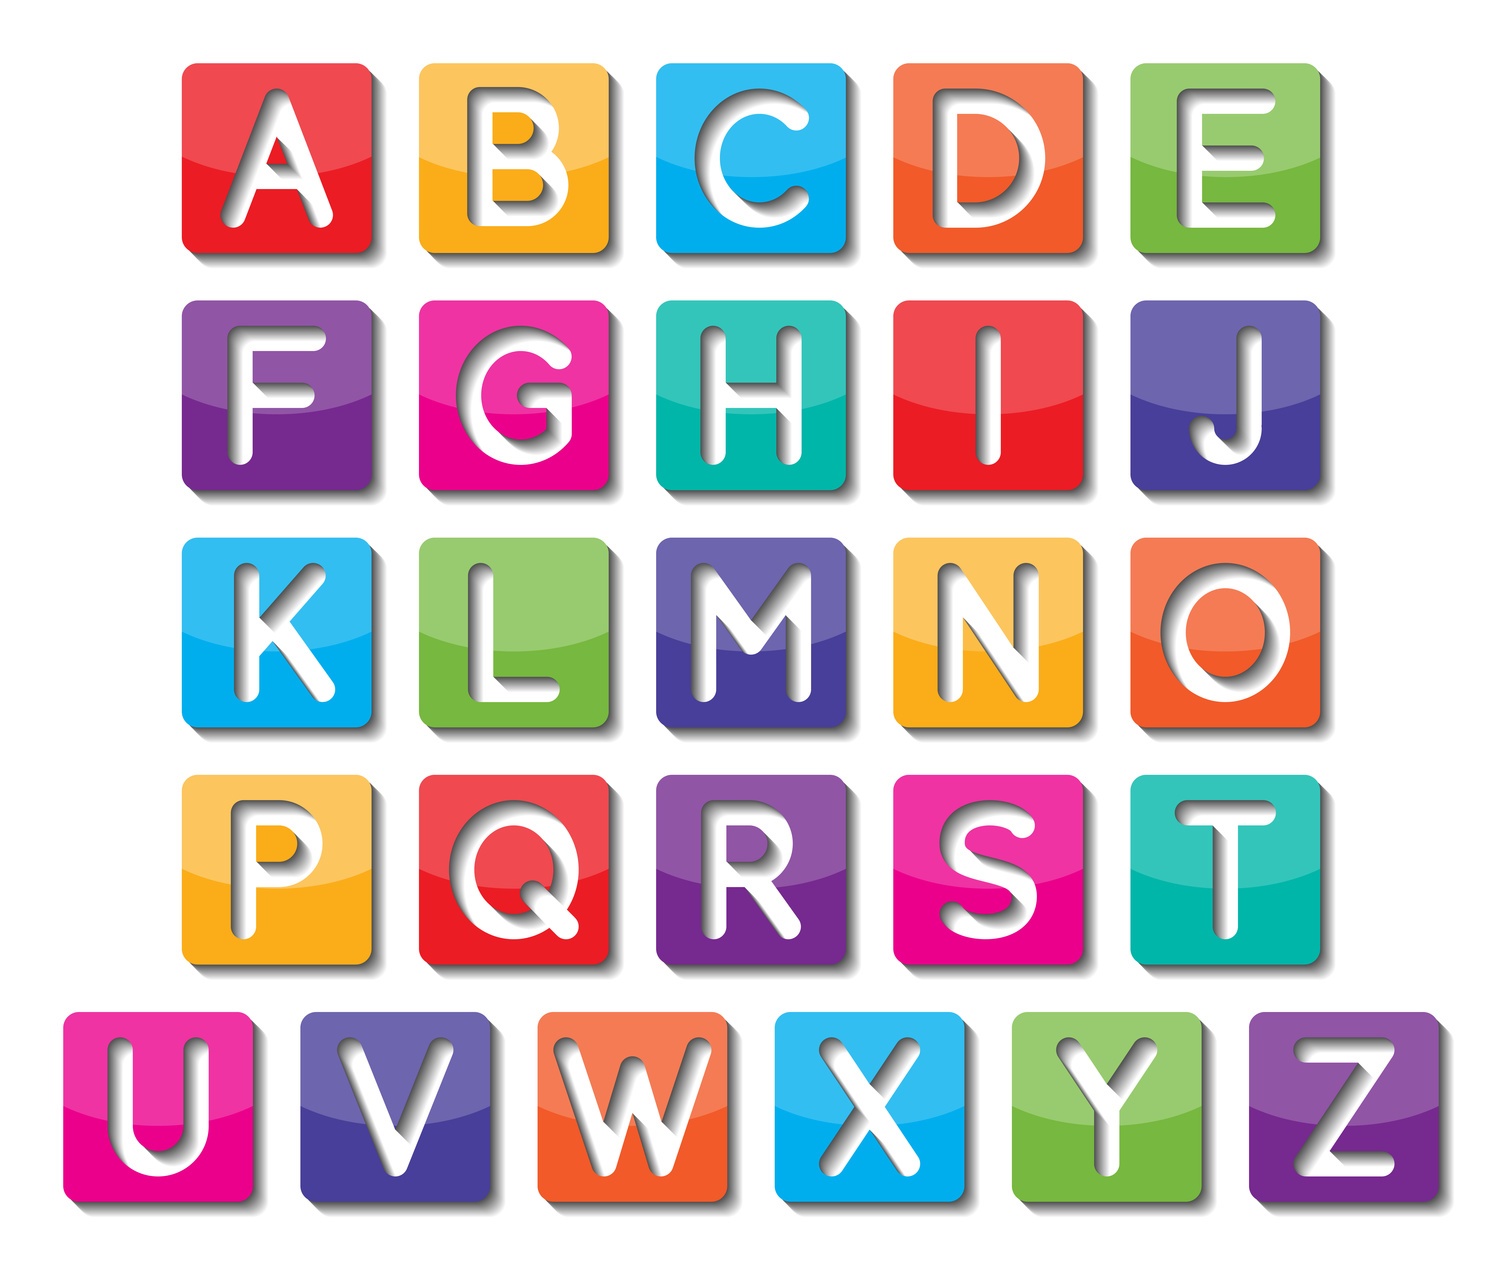 Alphabetical order | 1.7K plays | Quizizz